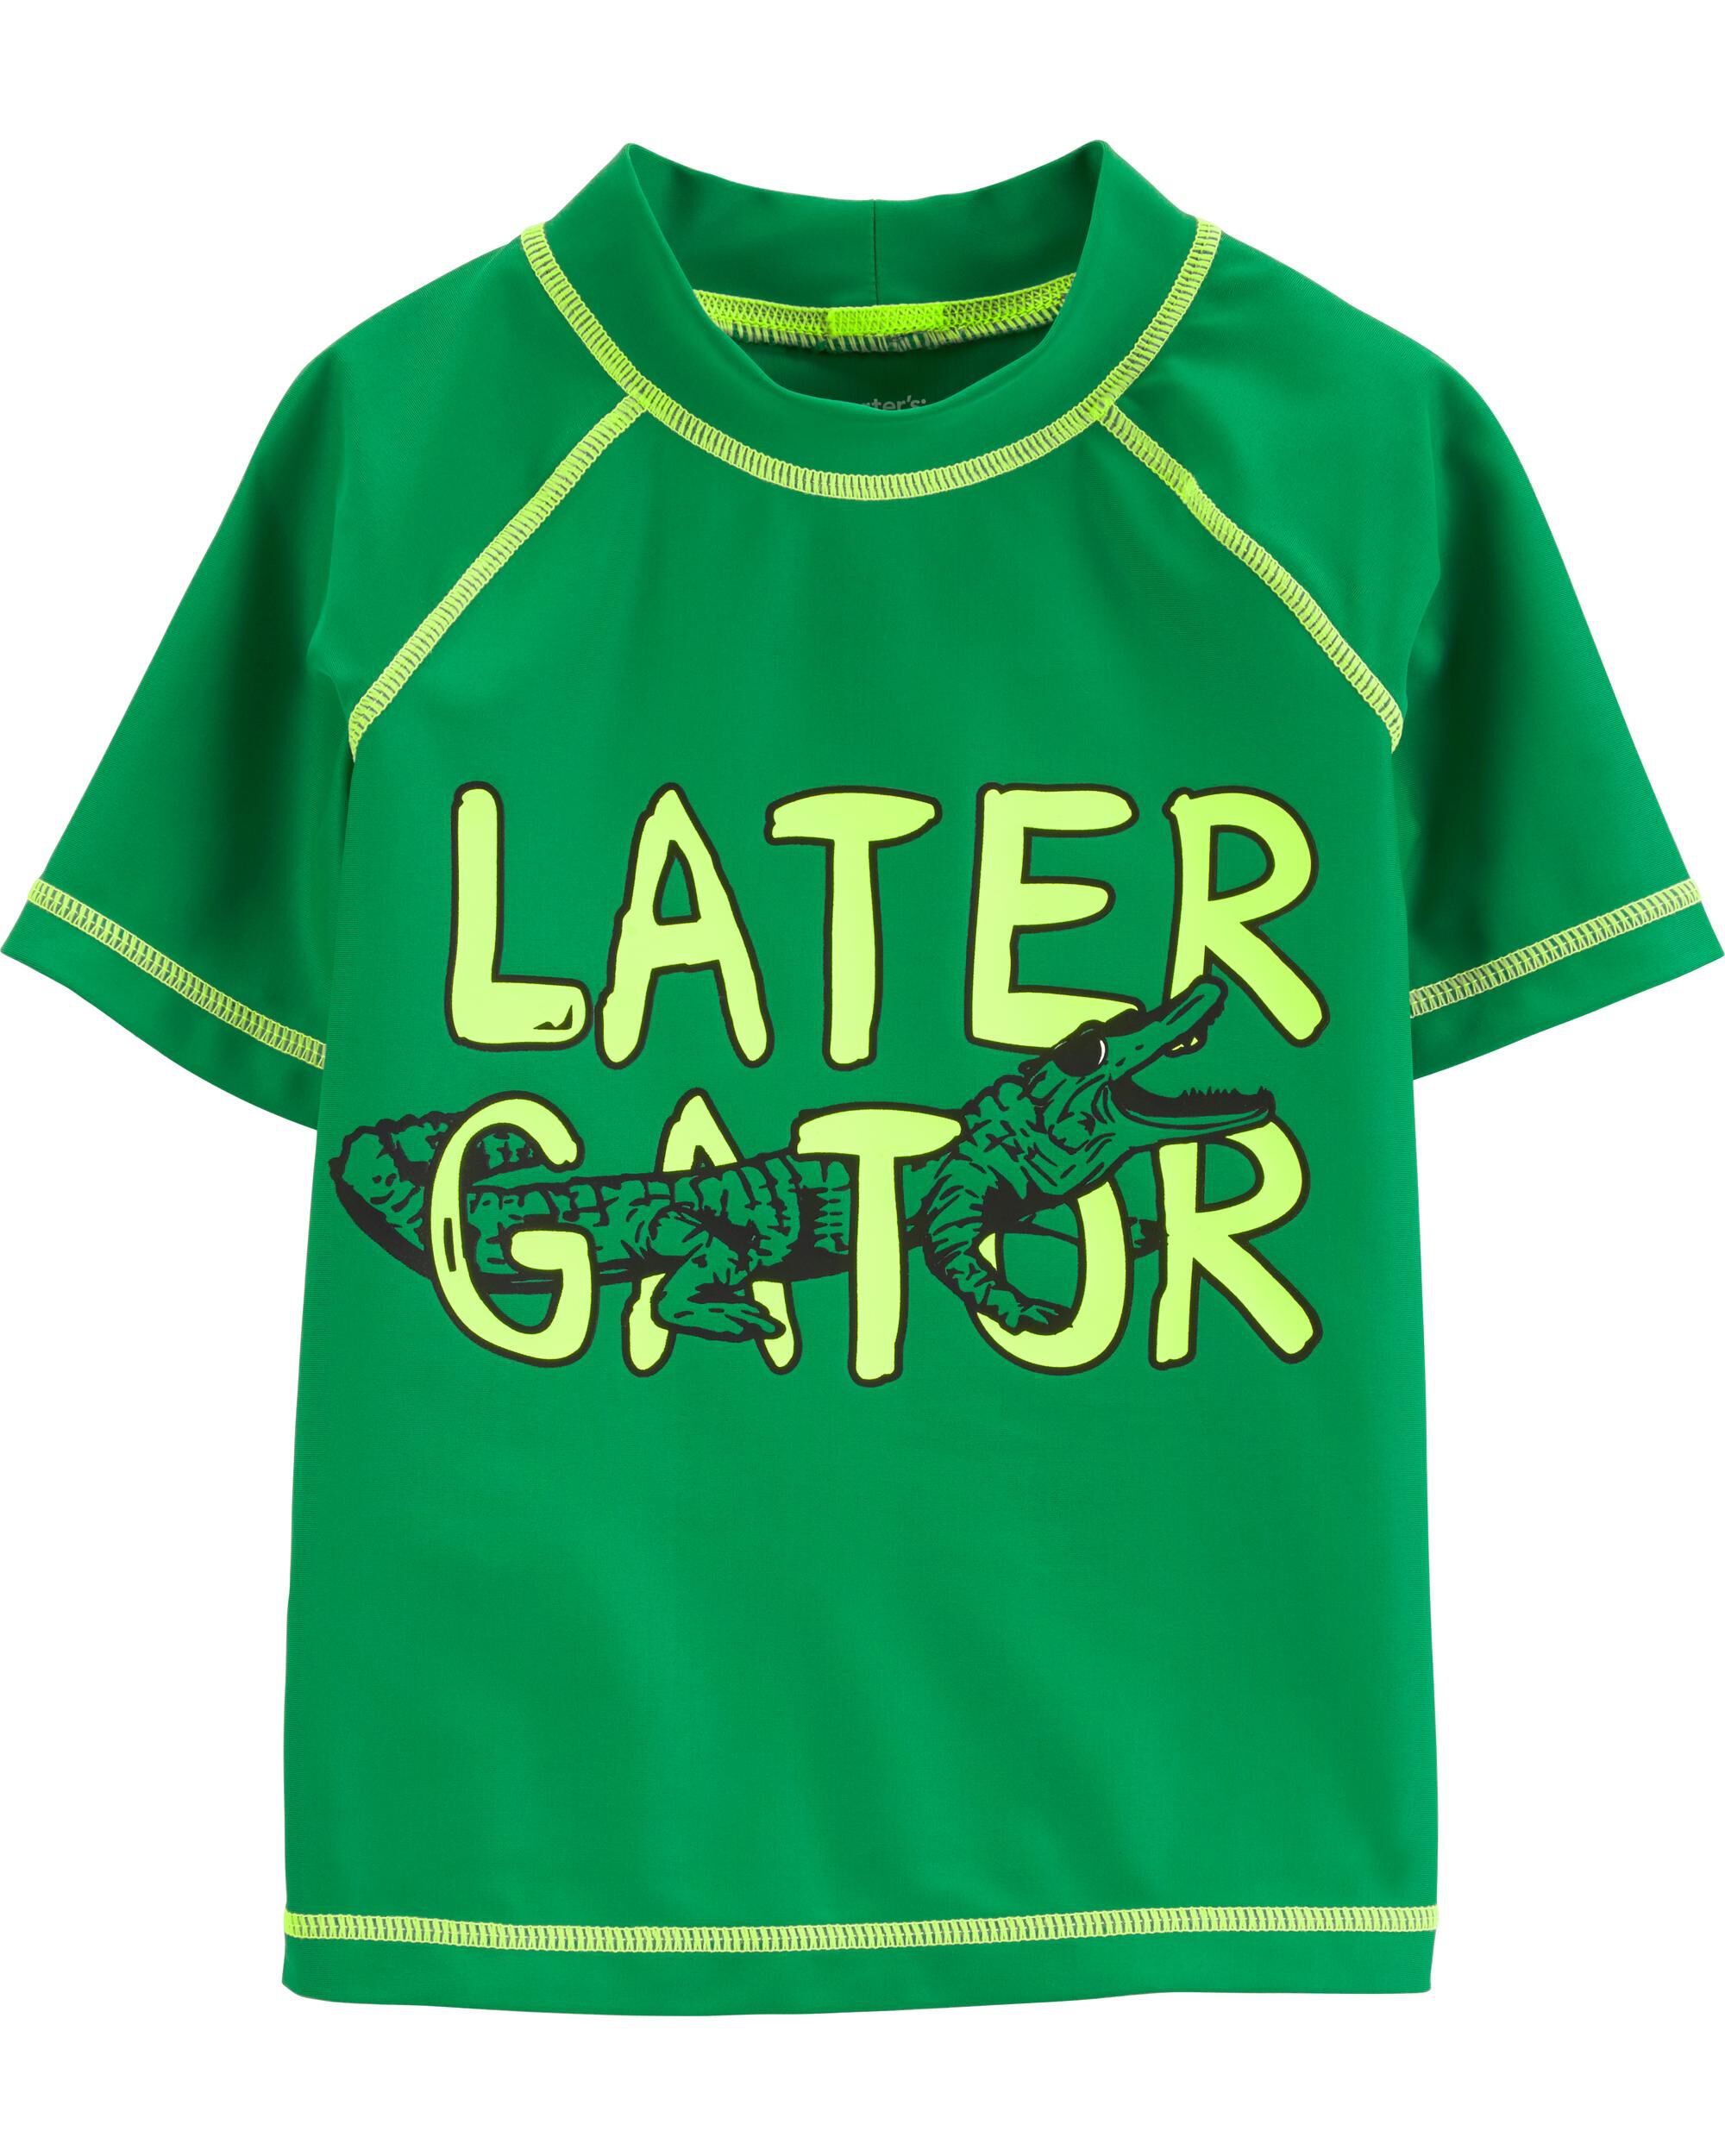 later gator shirt